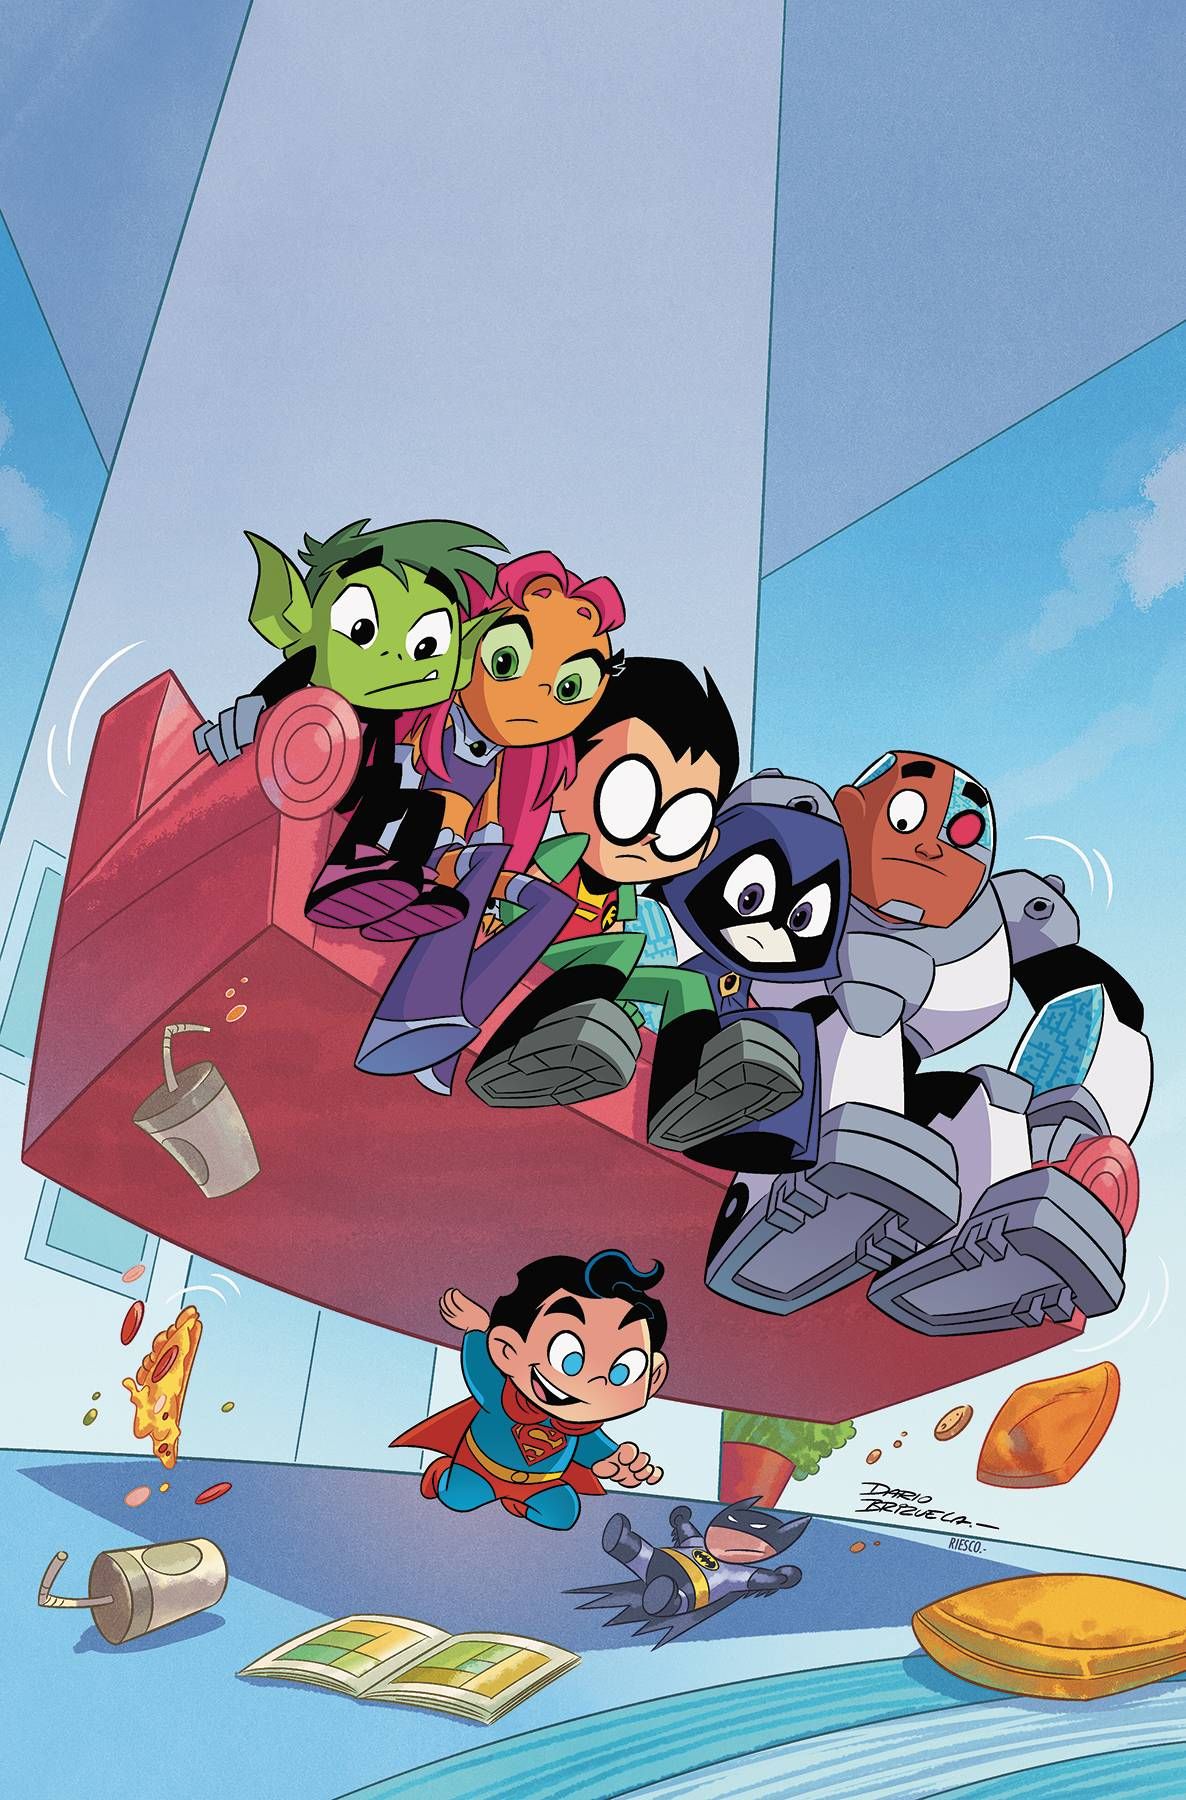 Teen Titans Go #23 Comic